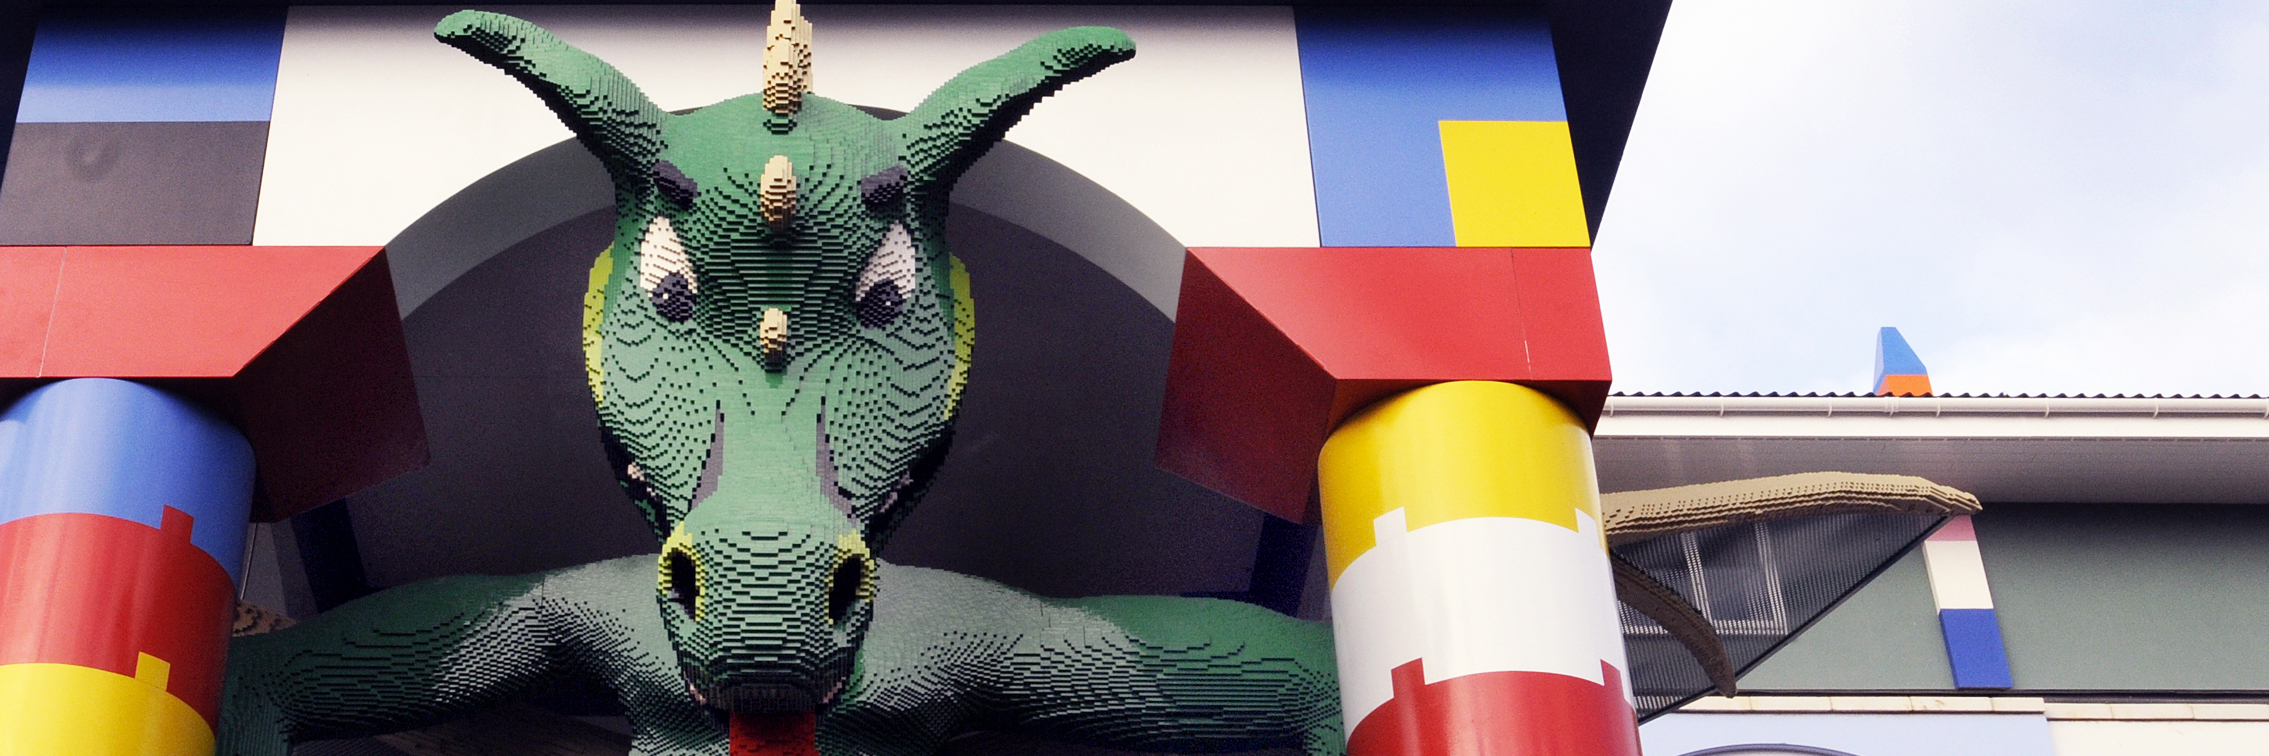 LEGO Dragon guarding the enterance of the LEGOLAND Resort Hotel